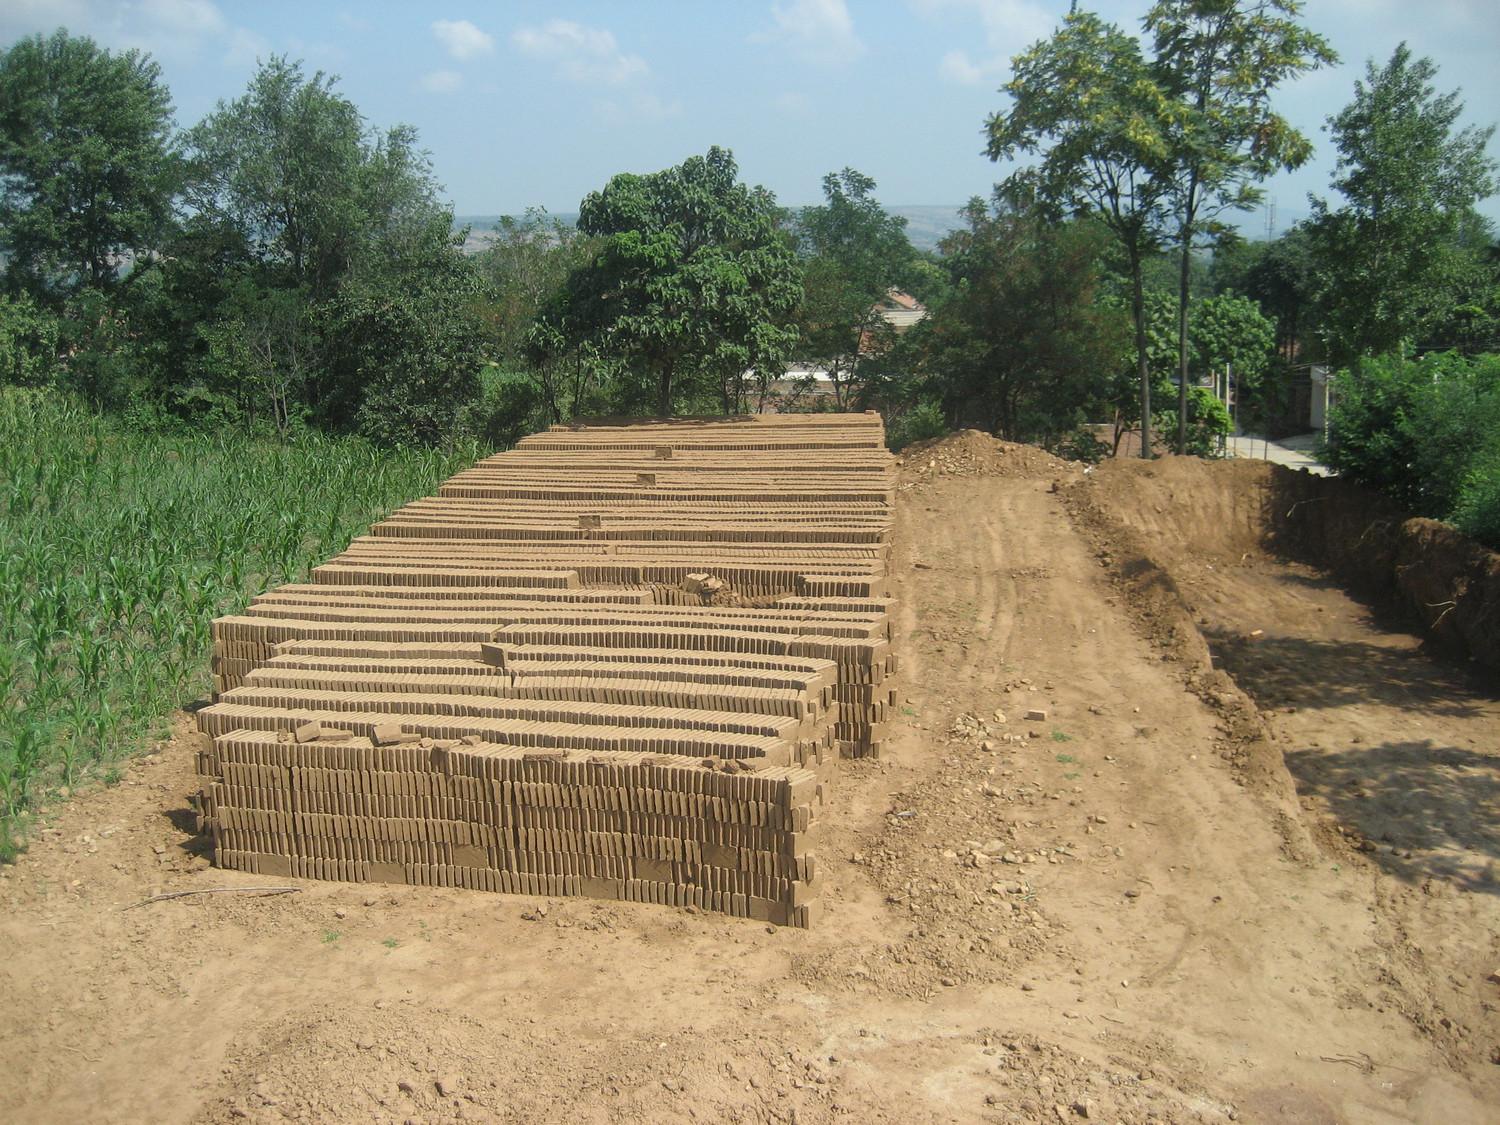 Locally manufactured mud bricks